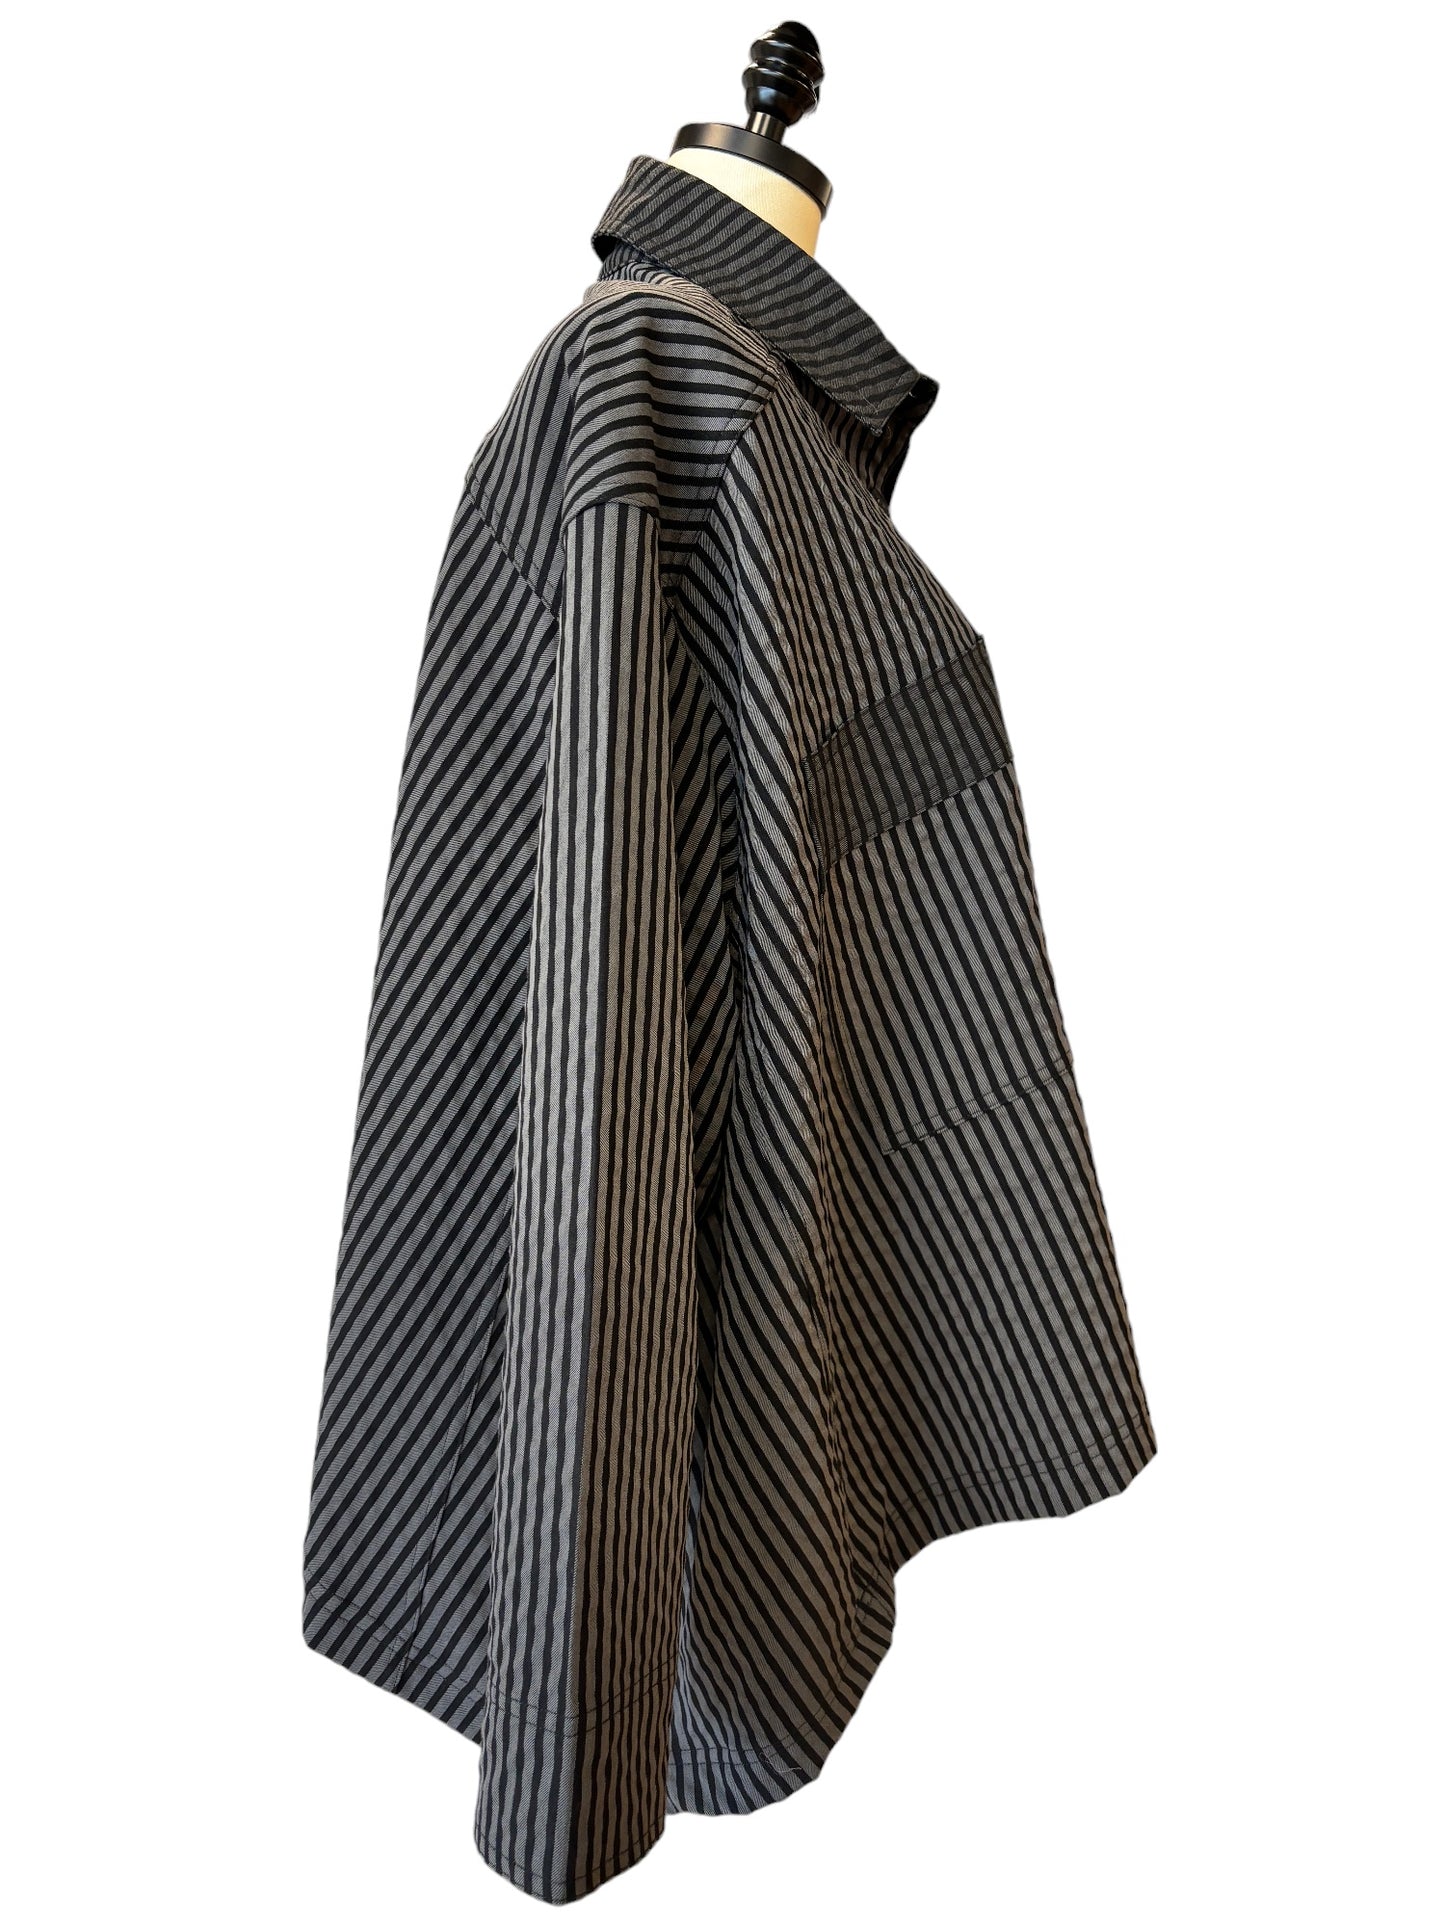 Two Pocket Jacket in Charcoal Stripe